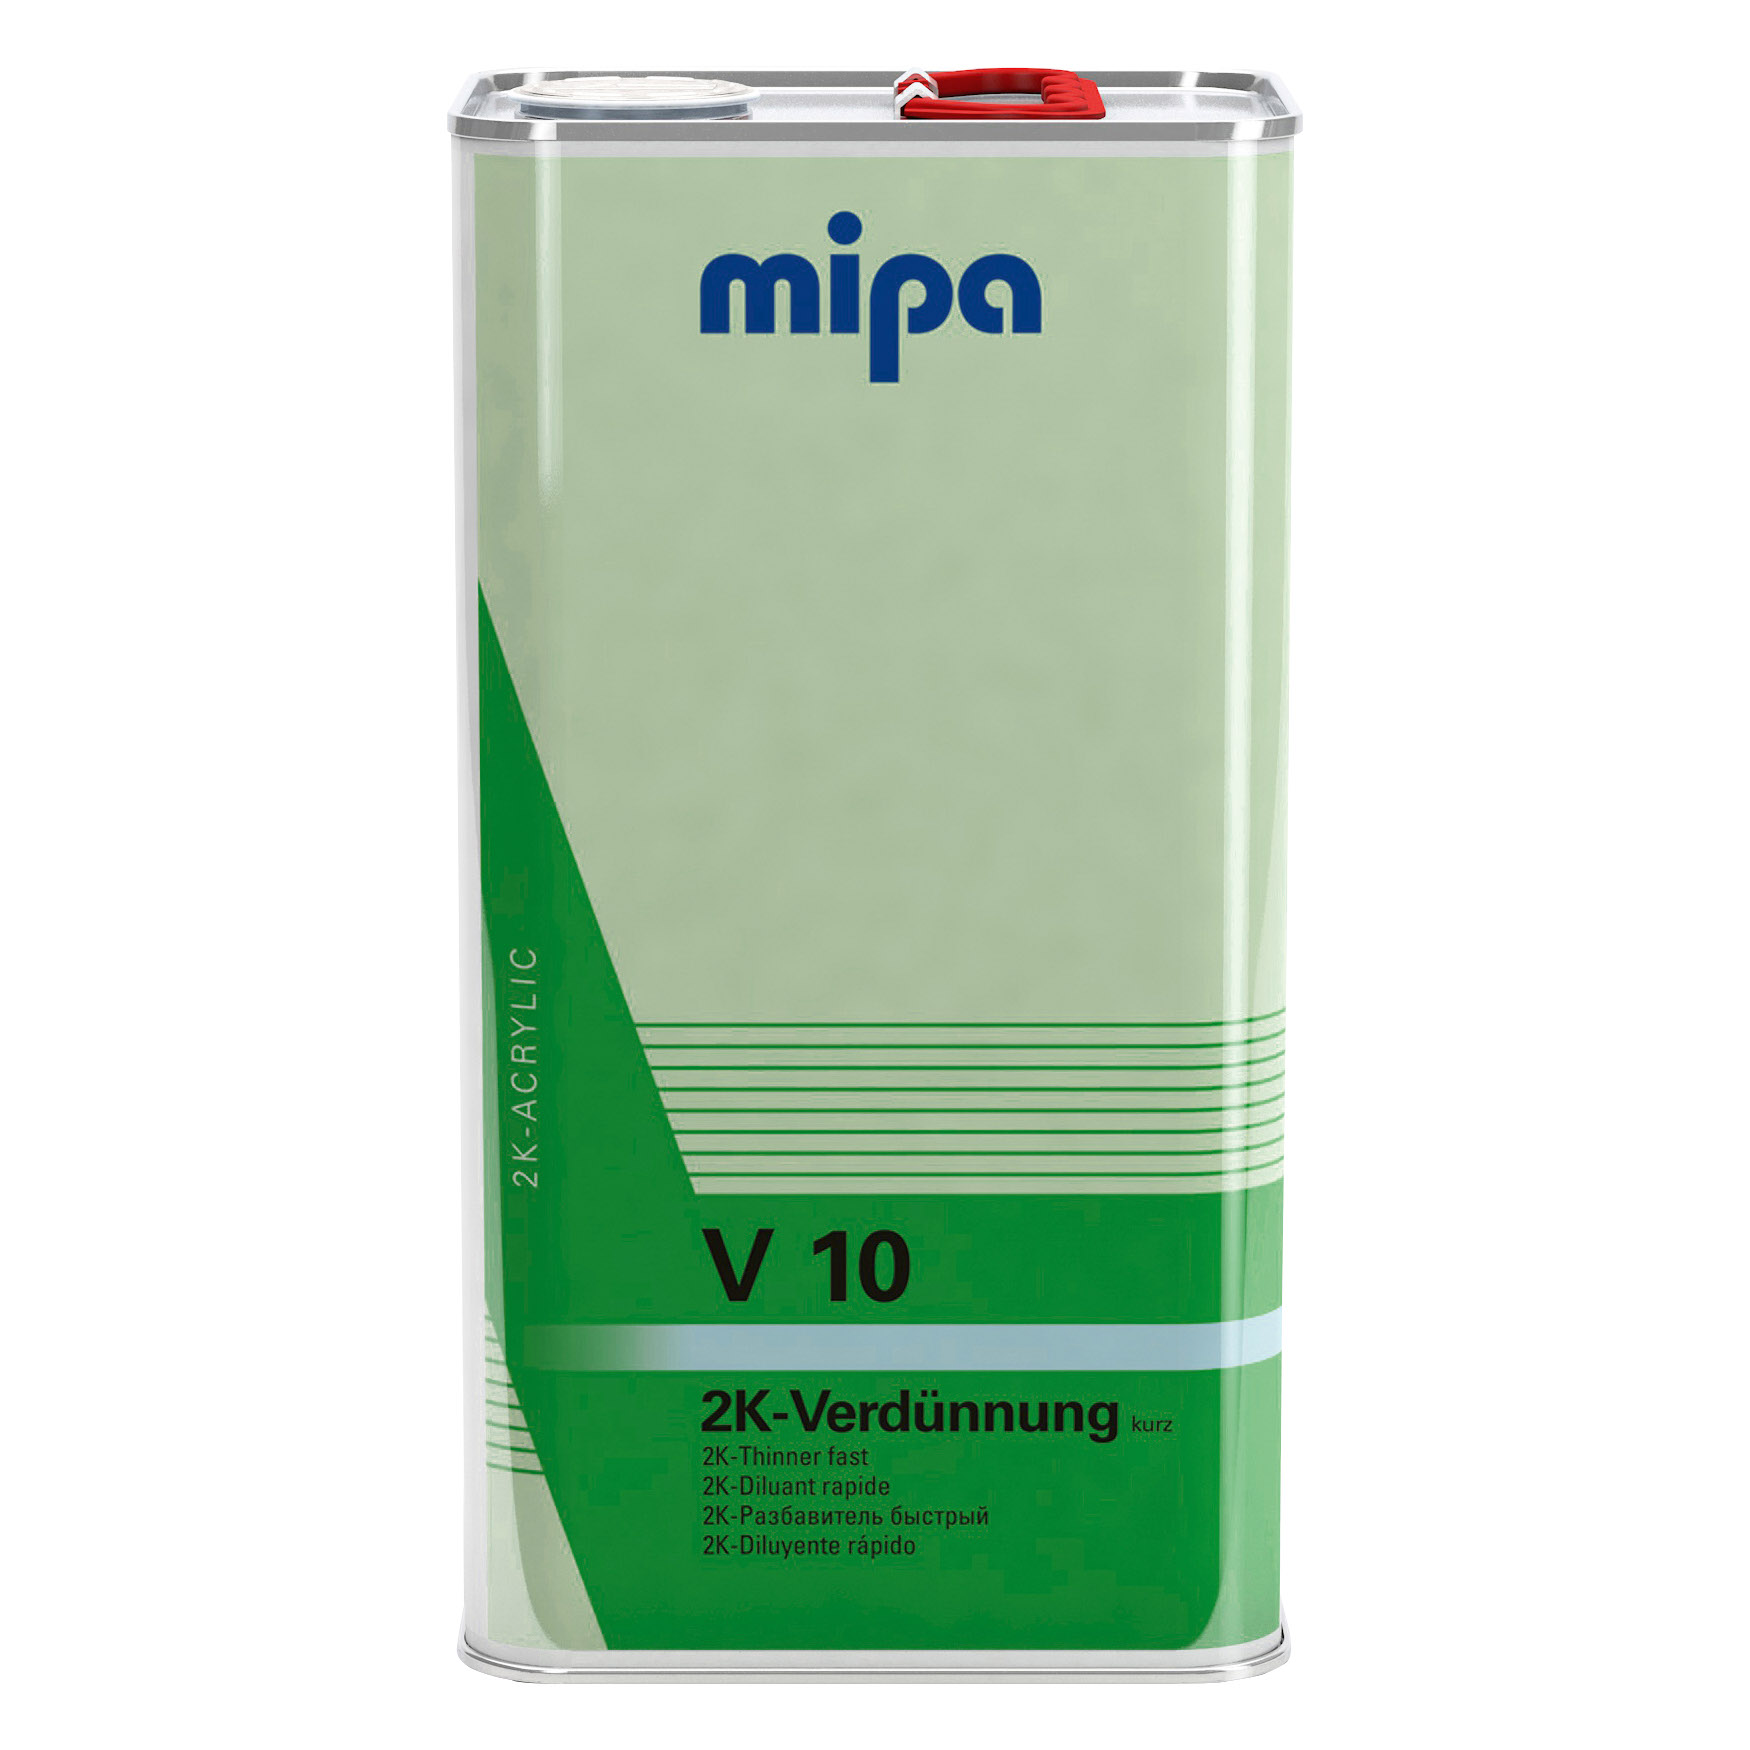 Mipa 2K-Verdünnung kurz V 10, 5l